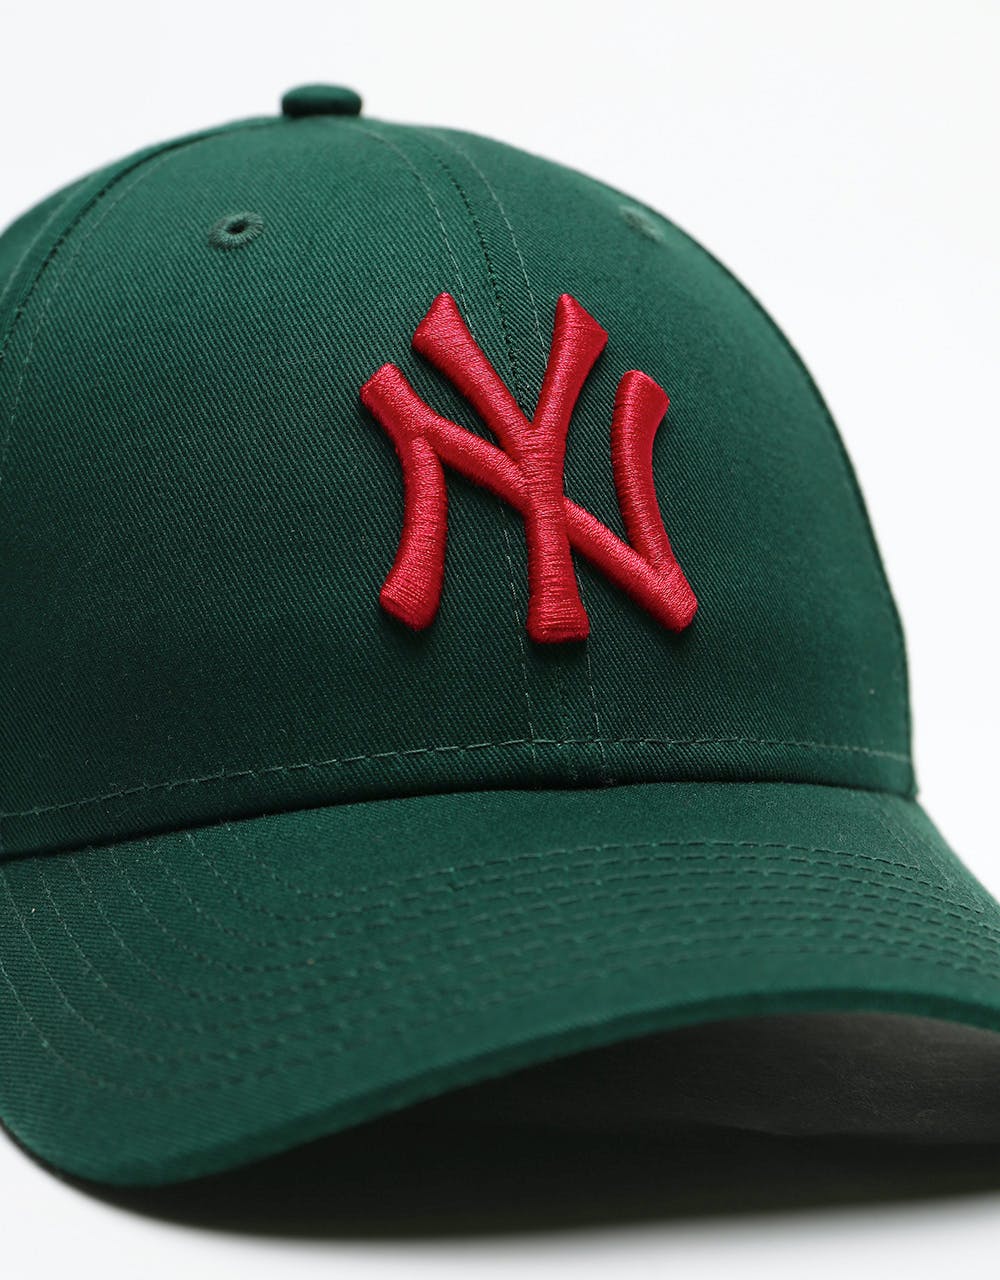 New Era 9Forty MLB New York Yankees Cap - Dark Green